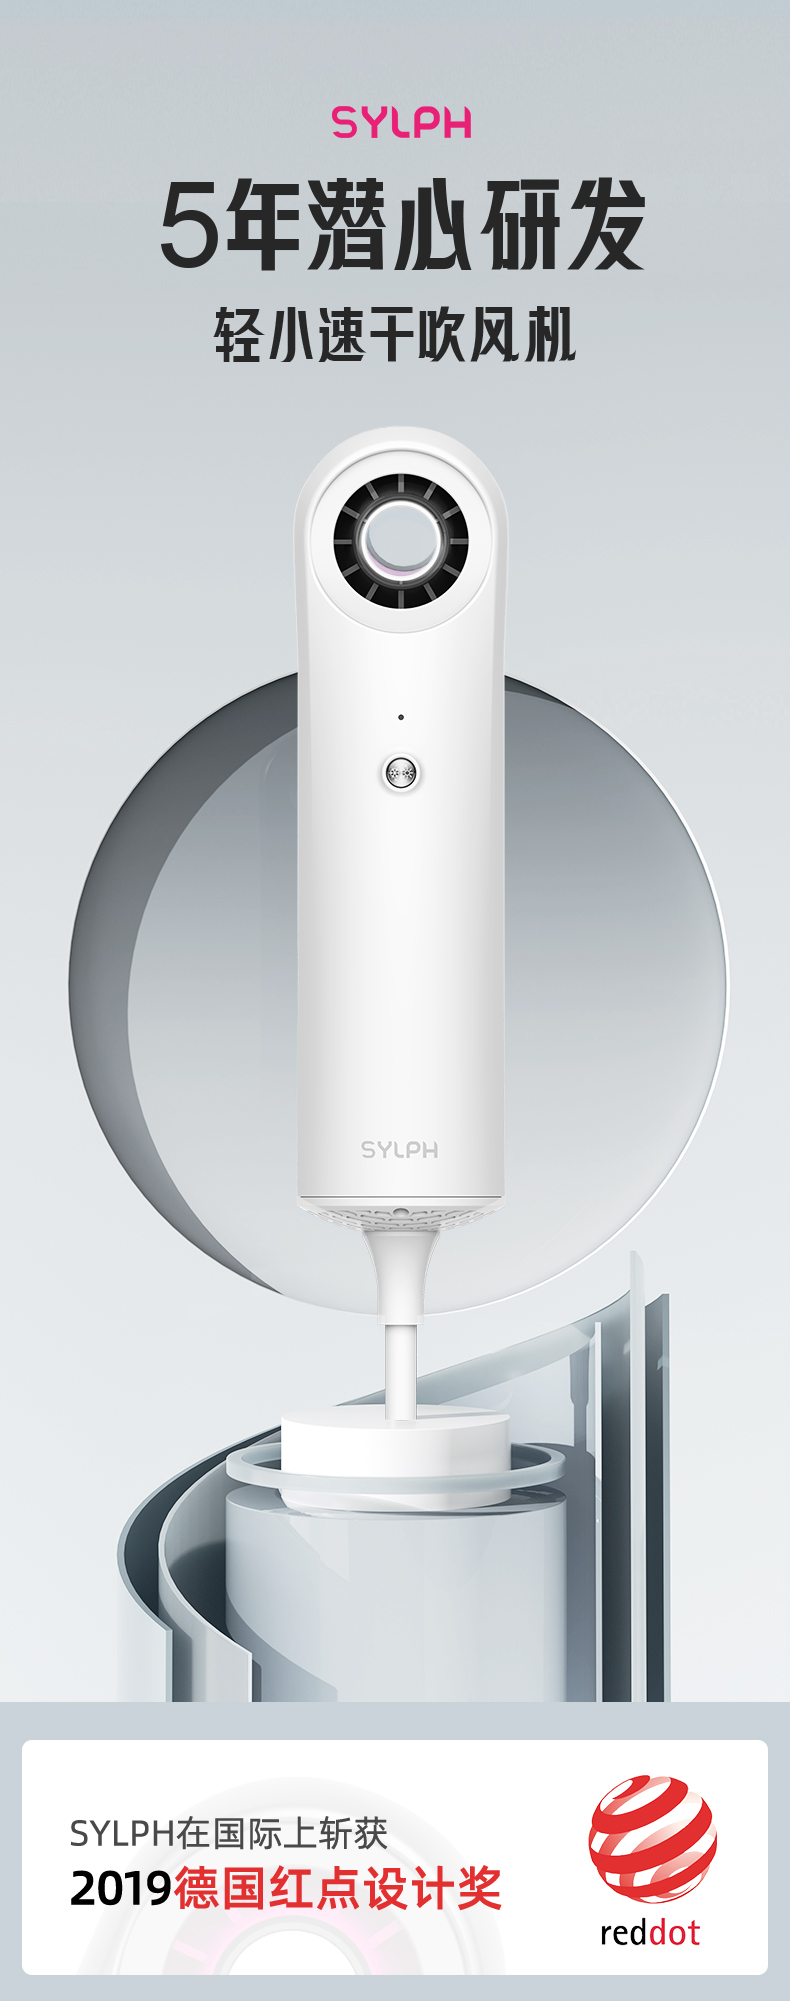 SYLPH便携高速吹风机免费试用,评测